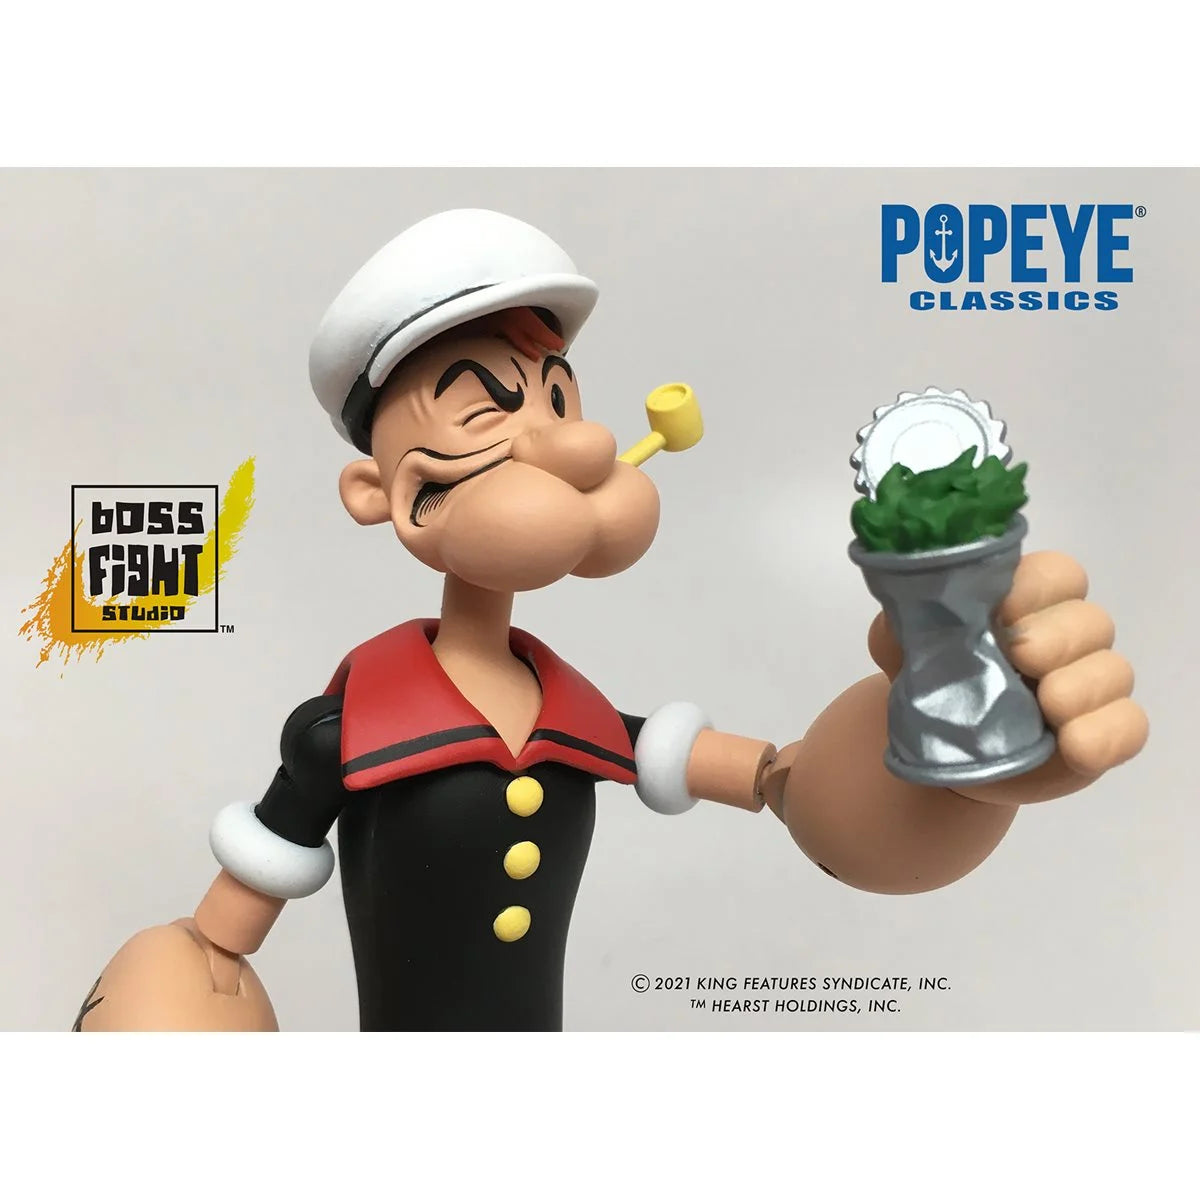 Popeye - Wikipedia